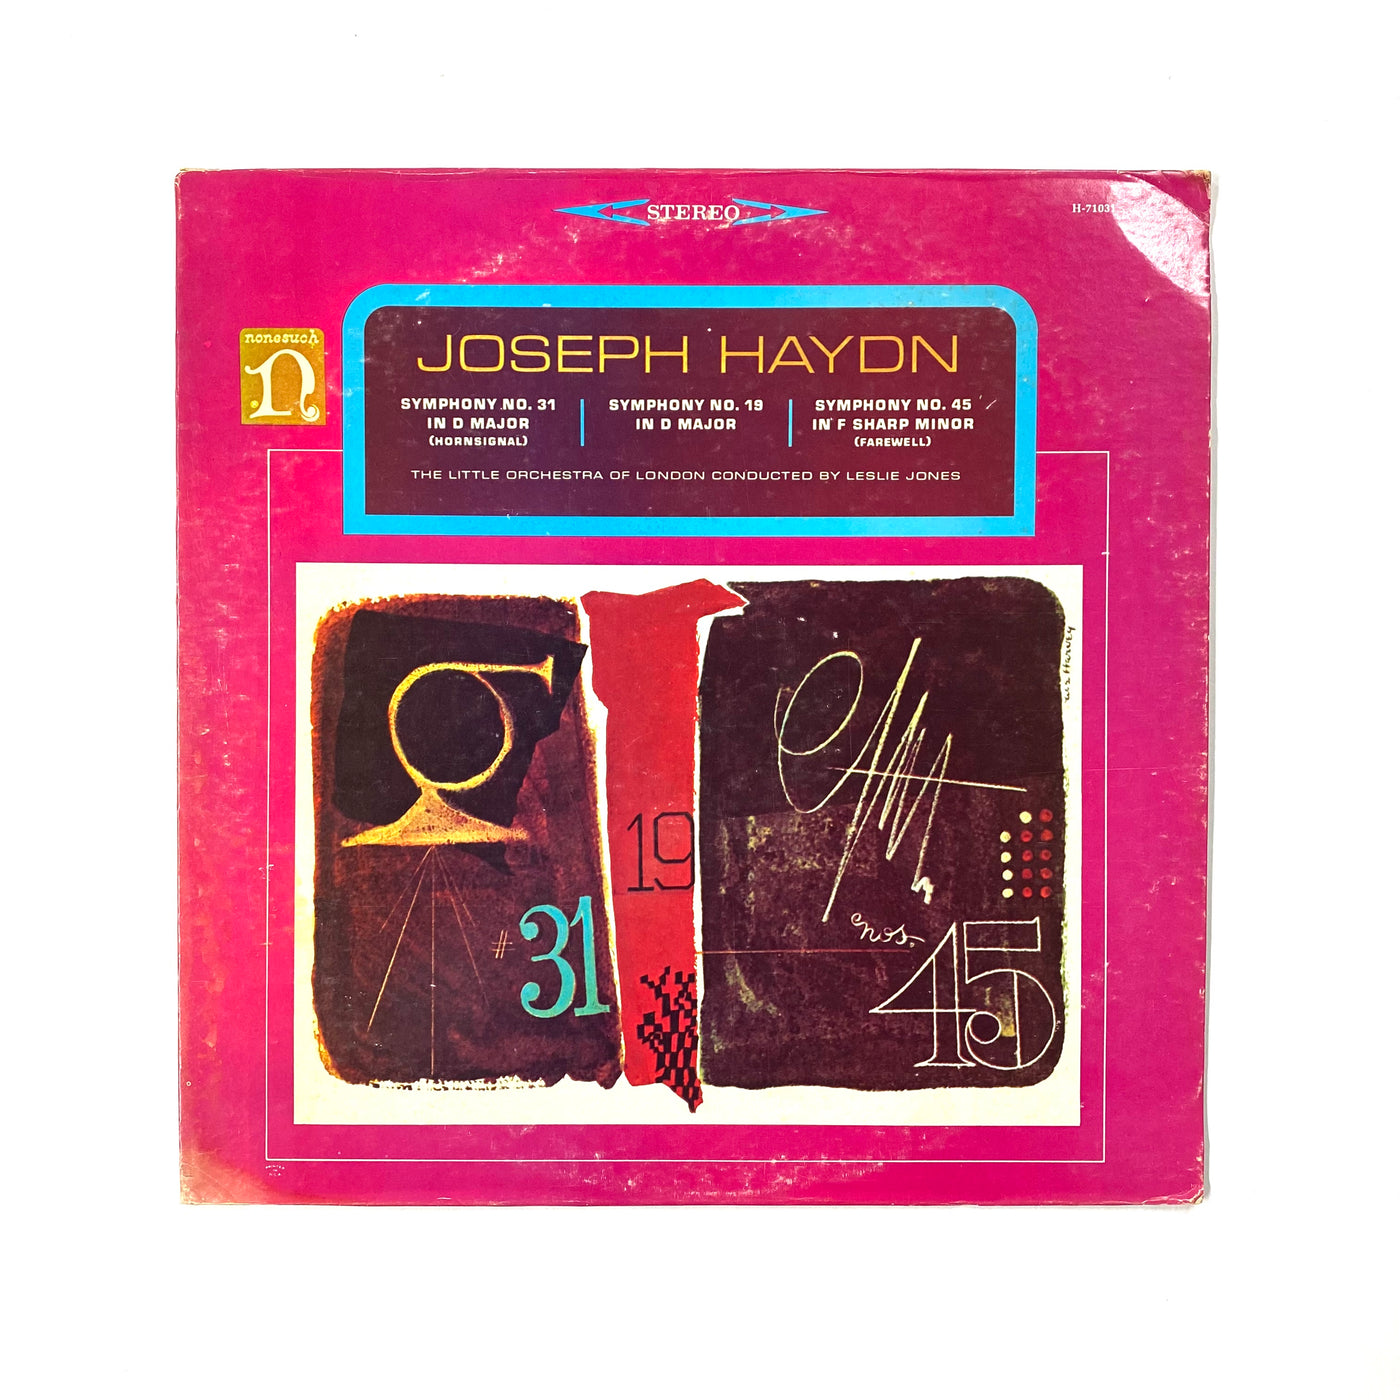 Joseph Haydn / Leslie Jones, The Little Orchestra Of London - Symphony No. 31 In D Major "Hornsignal", Symphony No. 19 In D Major, Symphony No. 45 In F Sharp Major "Farewell"